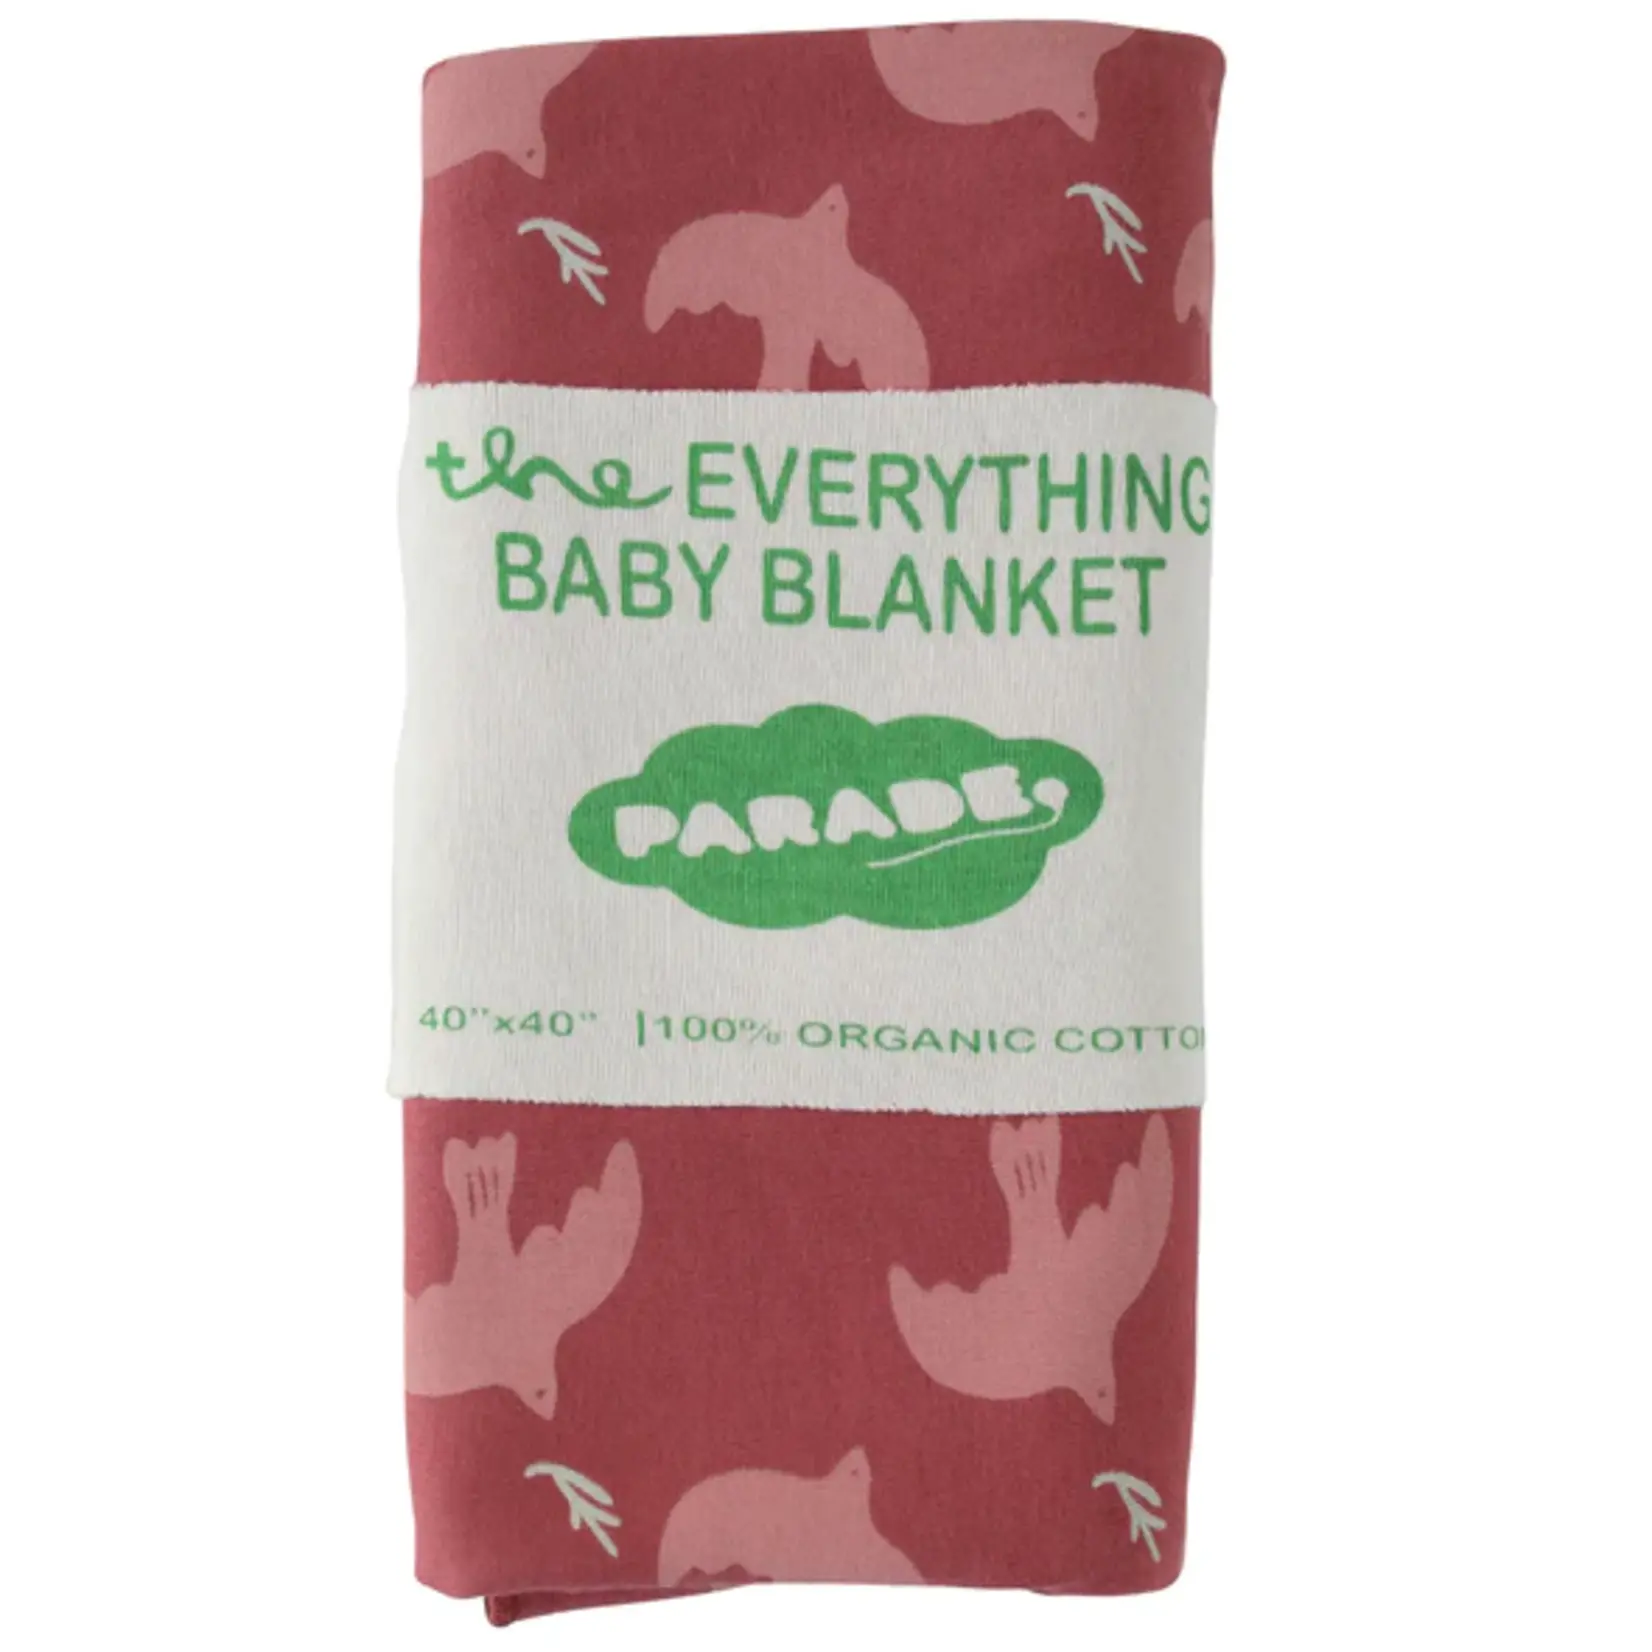 Parade Organics Baby Co. Parade Everything Blanket